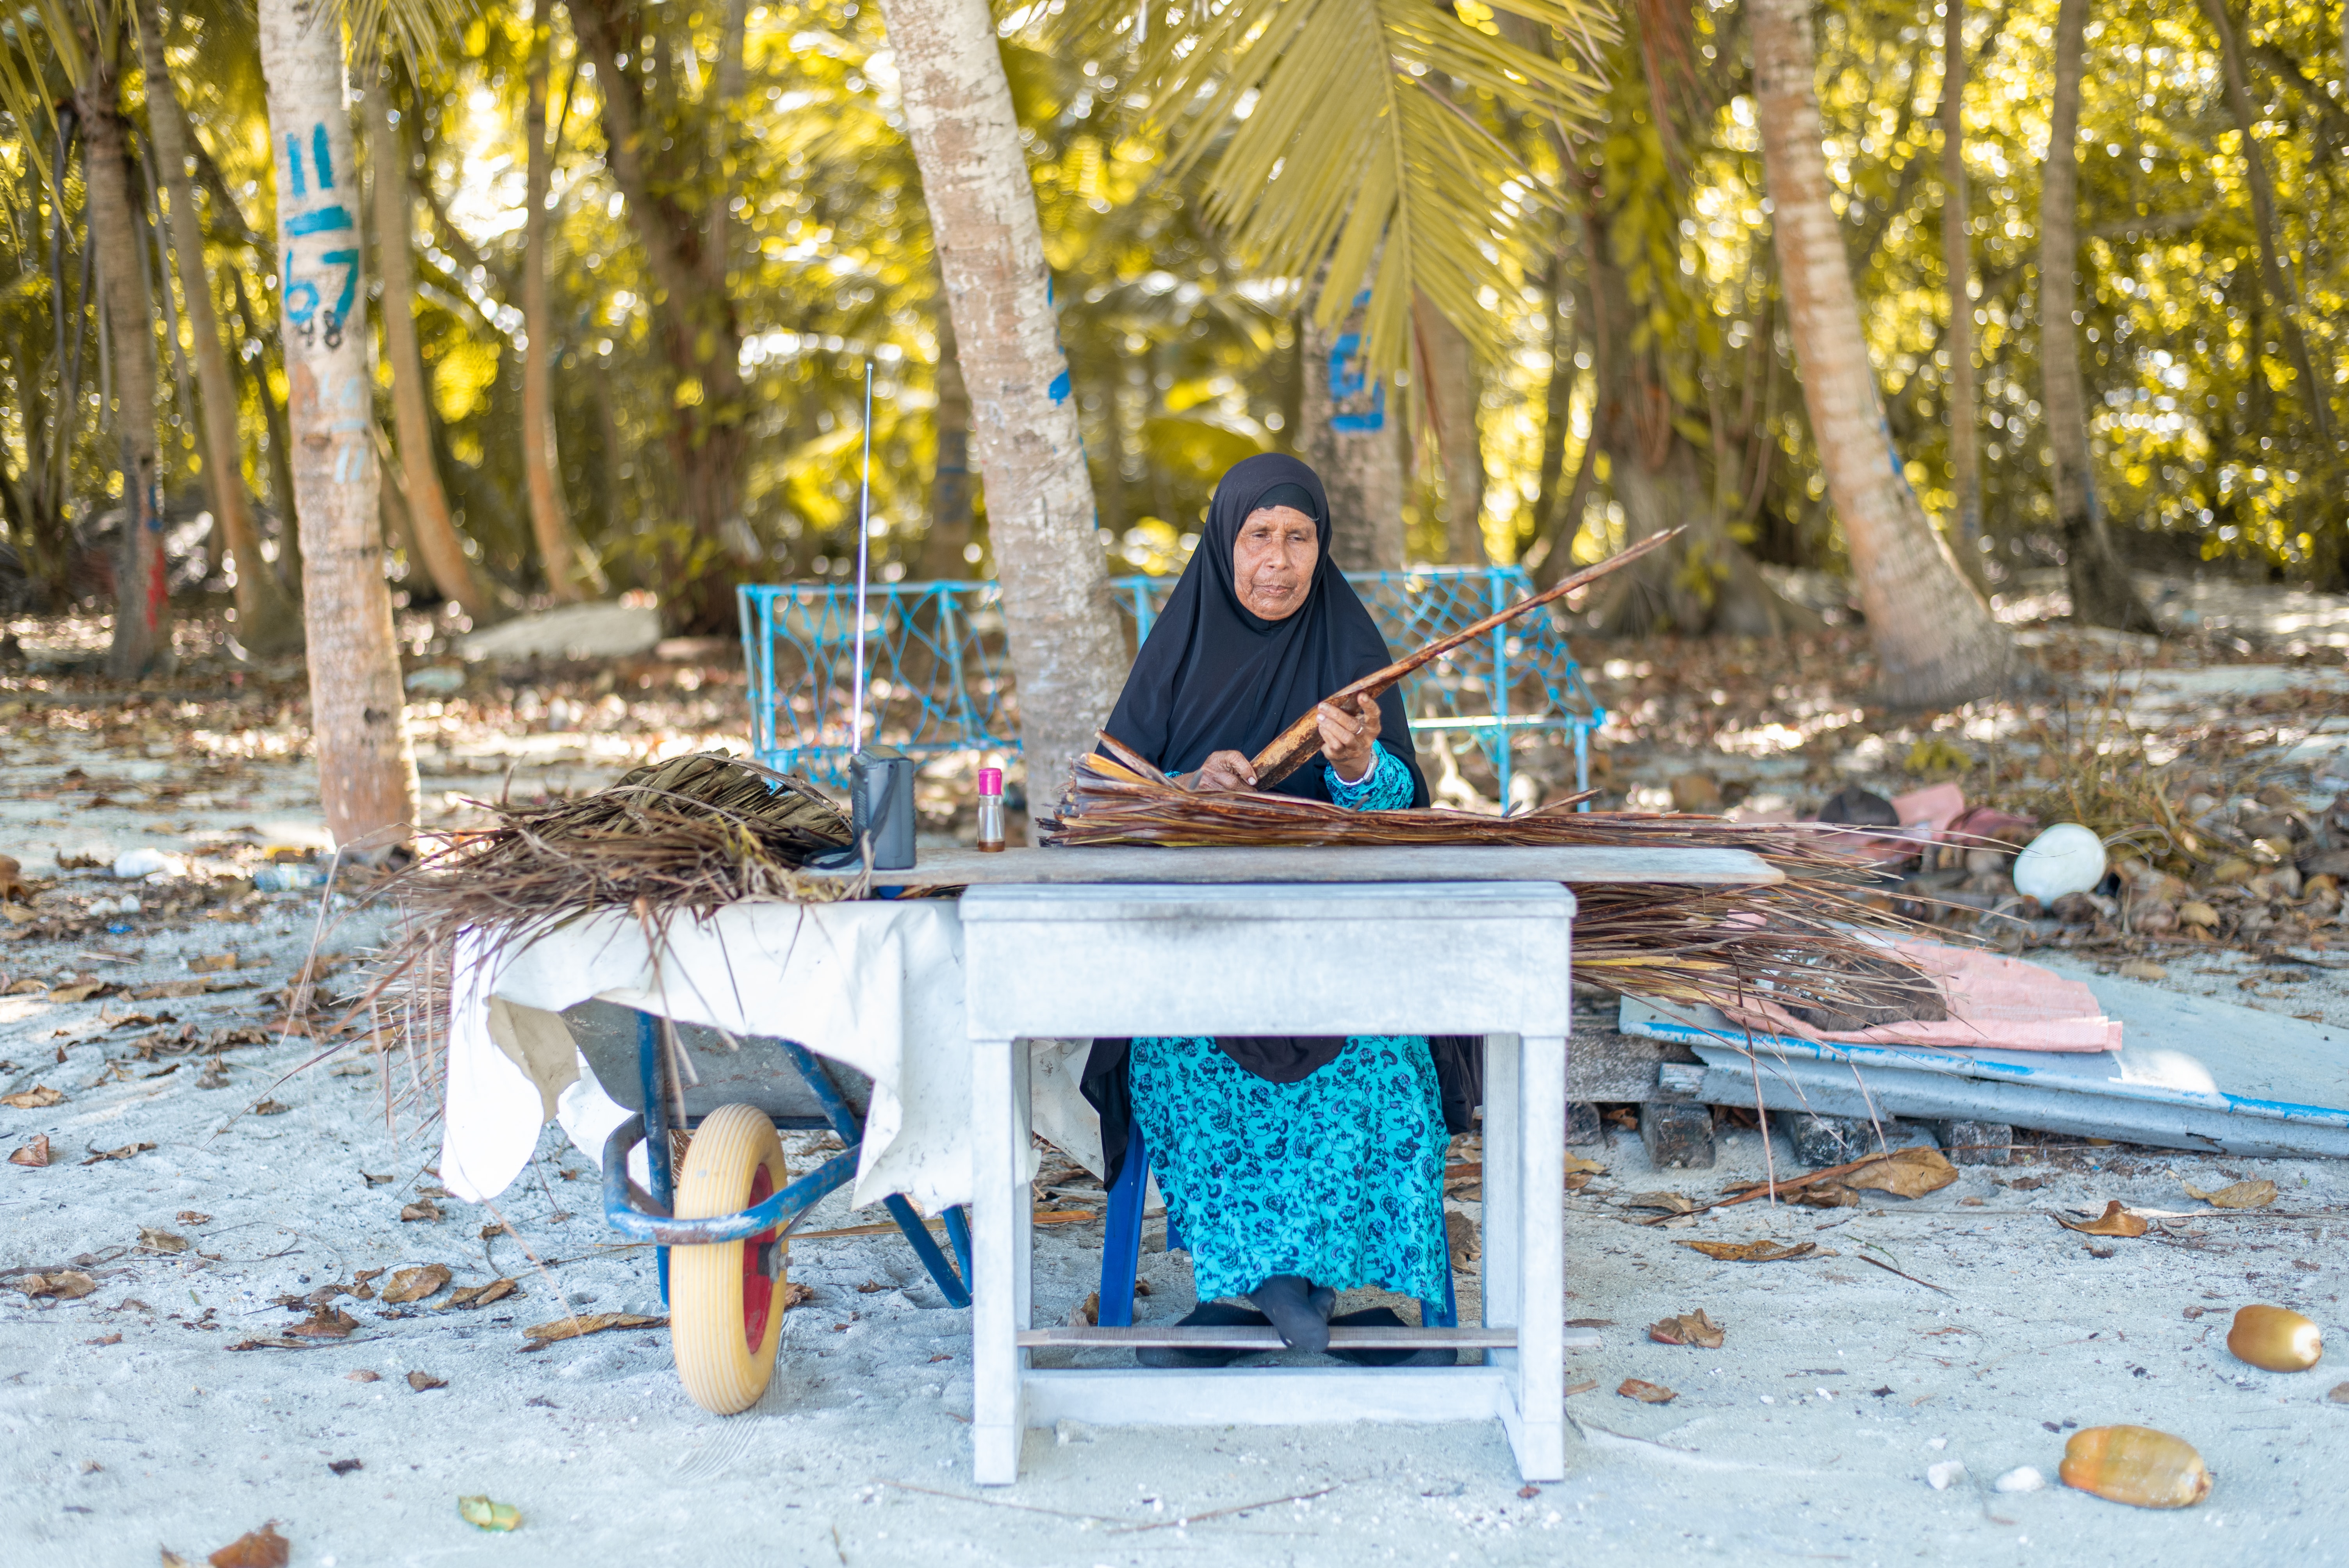 Maldives woman weaving handicrafts